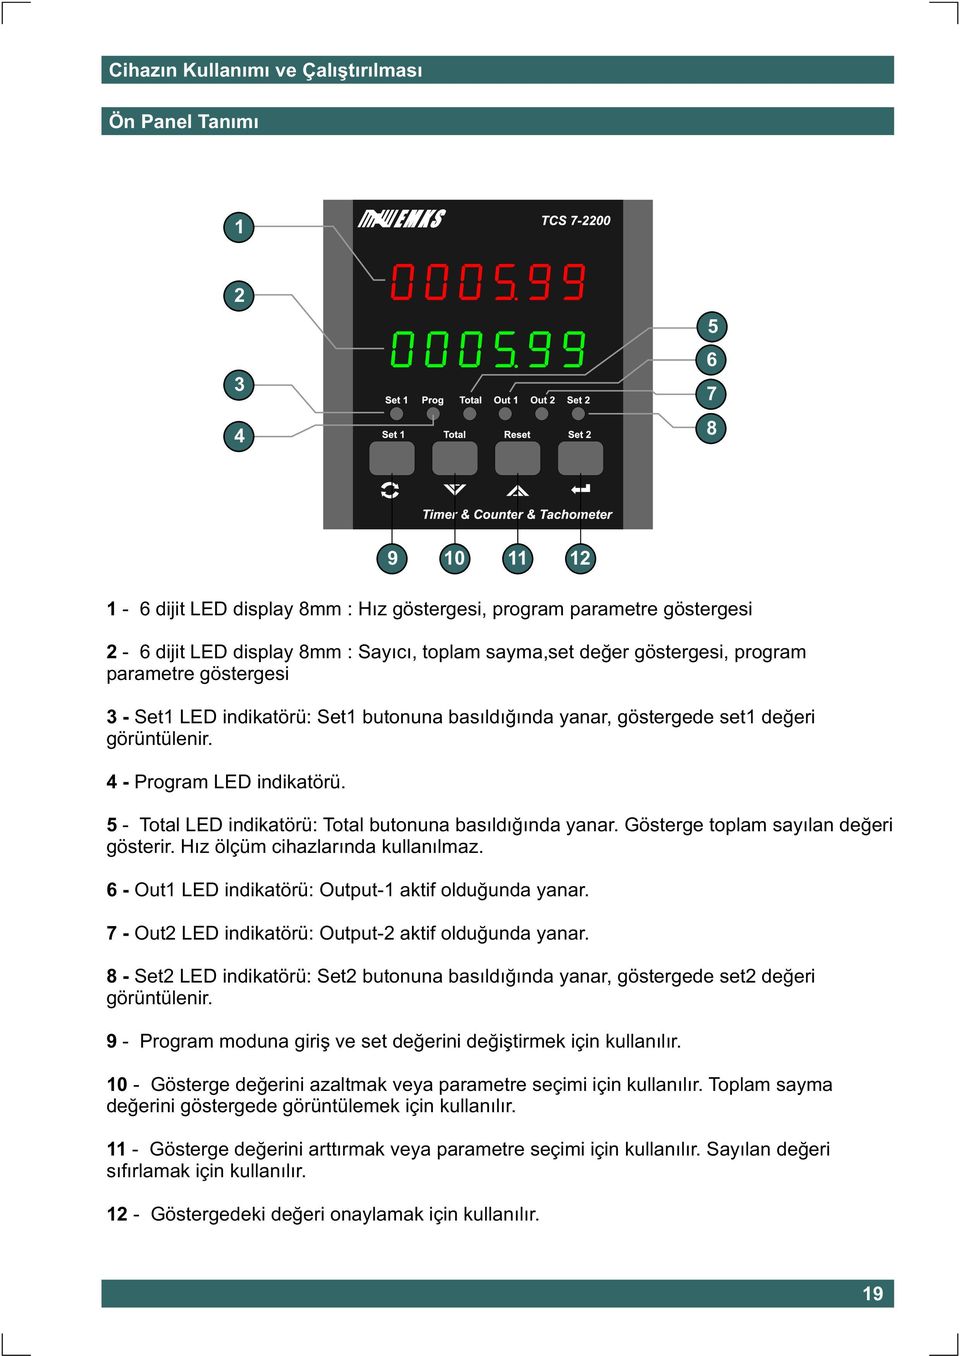 9 10 11 12 5 - LED indikatörü: butonuna basýldýðýnda yanar. Gösterge toplam sayýlan deðeri gösterir. Hýz ölçüm cihazlarýnda kullanýlmaz. 6 - LED indikatörü: Output-1 aktif olduðunda yanar.